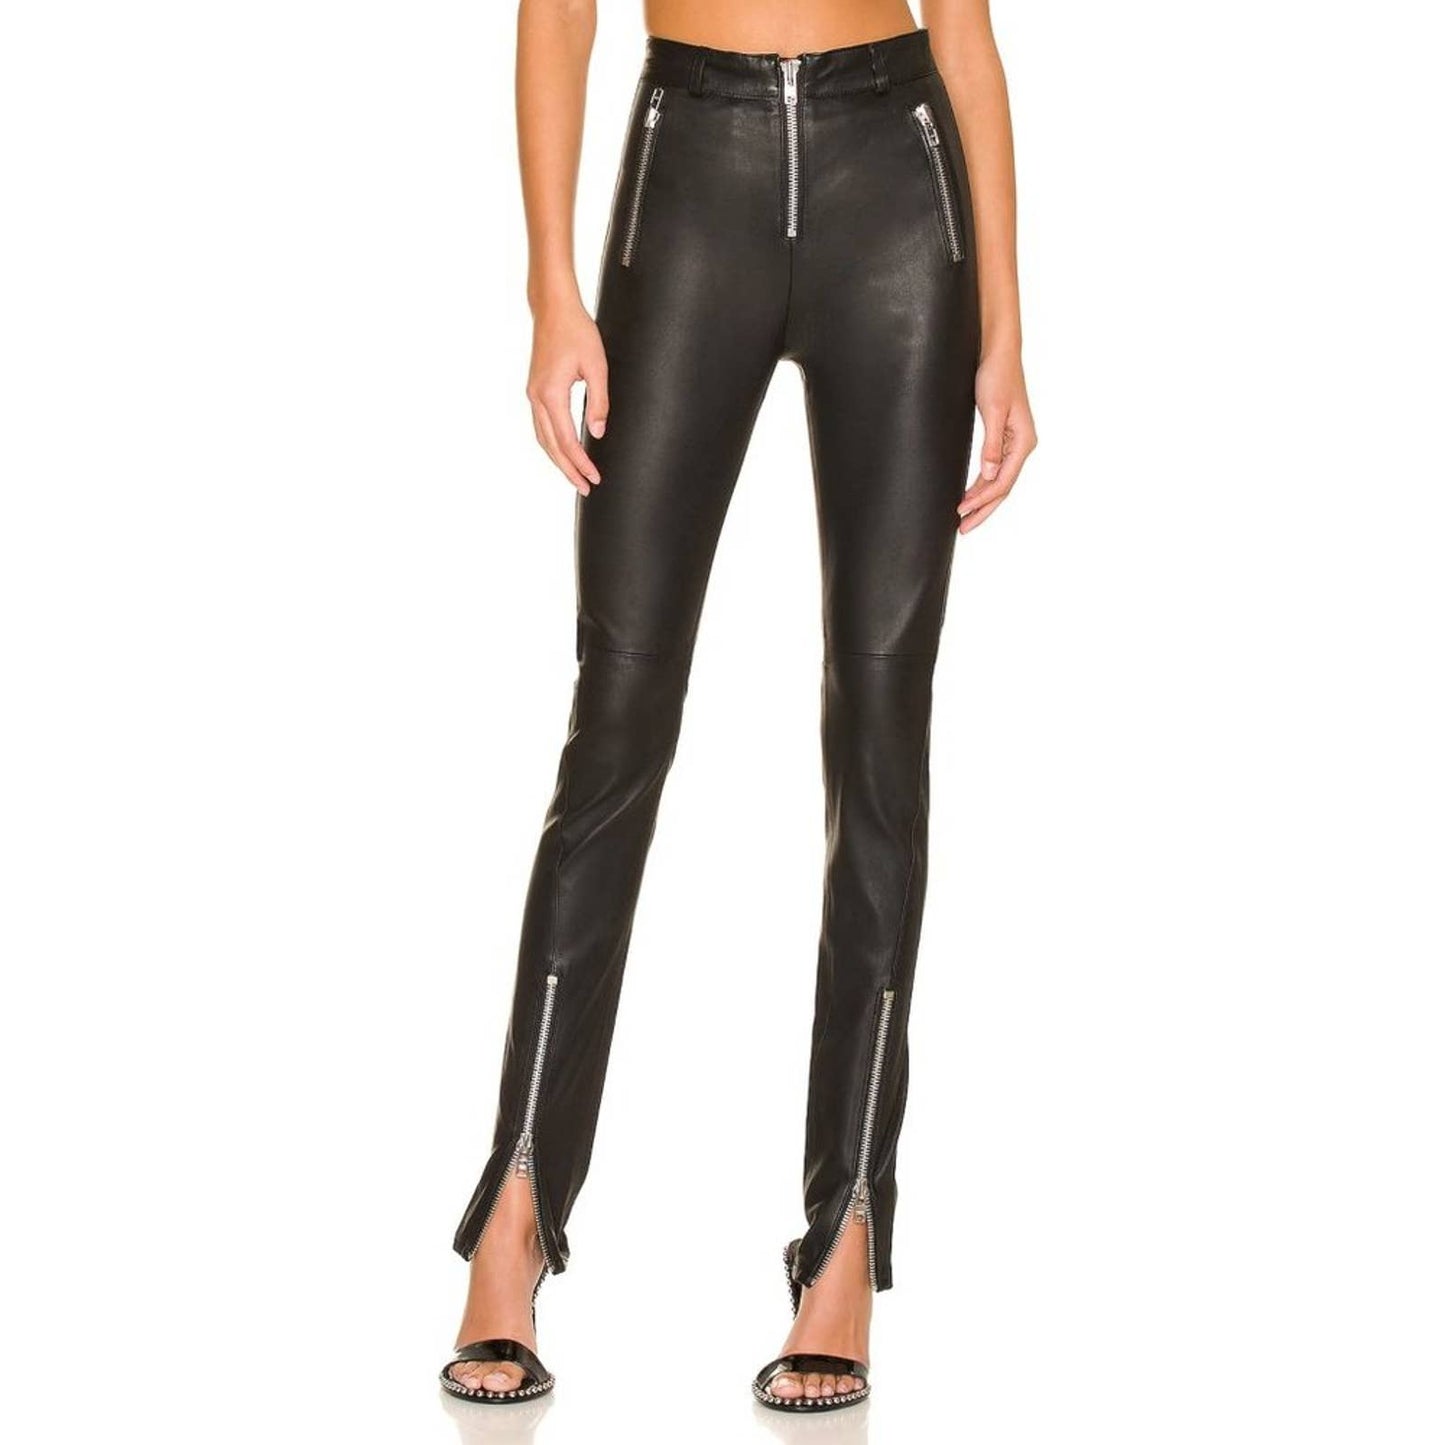 Camila Coelho Ashley Leather Pant in Black NWT Size XXS